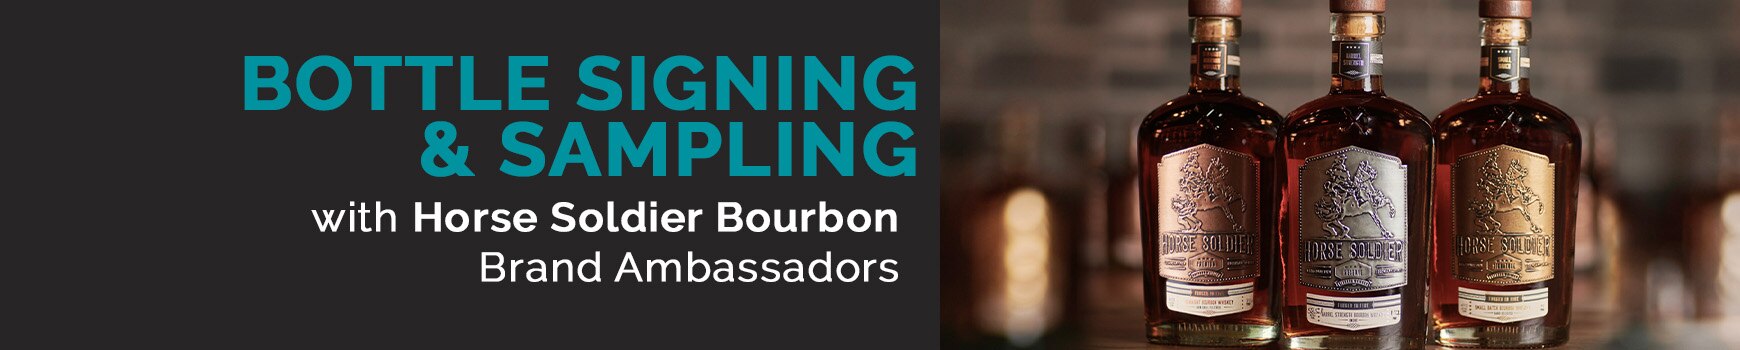 Bottle Signing & Sampling with Horse Soldier Bourbon Brand Ambassadors